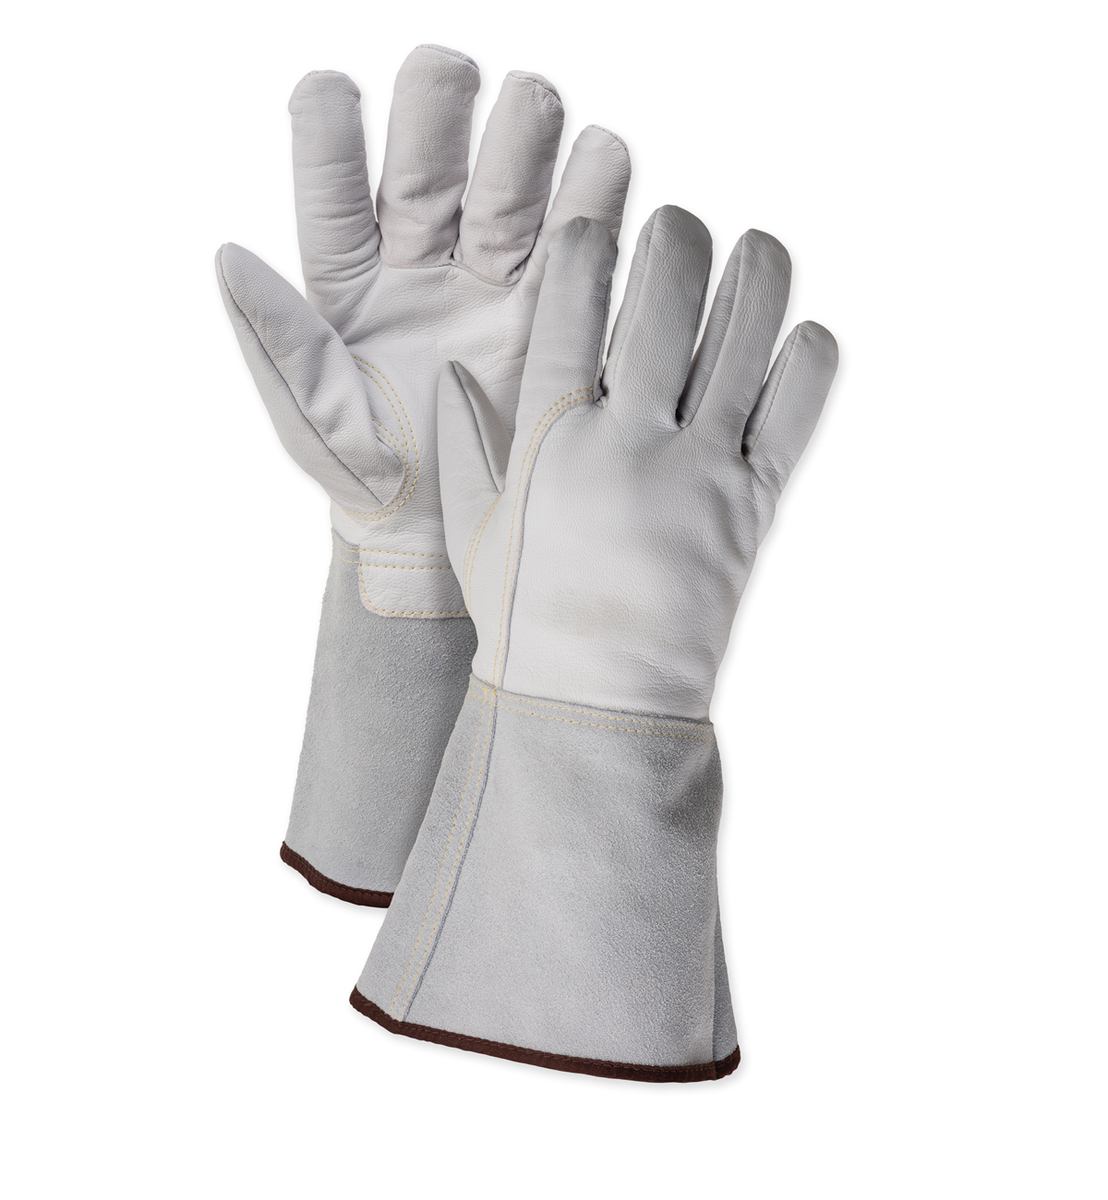 Glove New high quality Wells Lamont Fillet Butcher Glove Spectra  $20